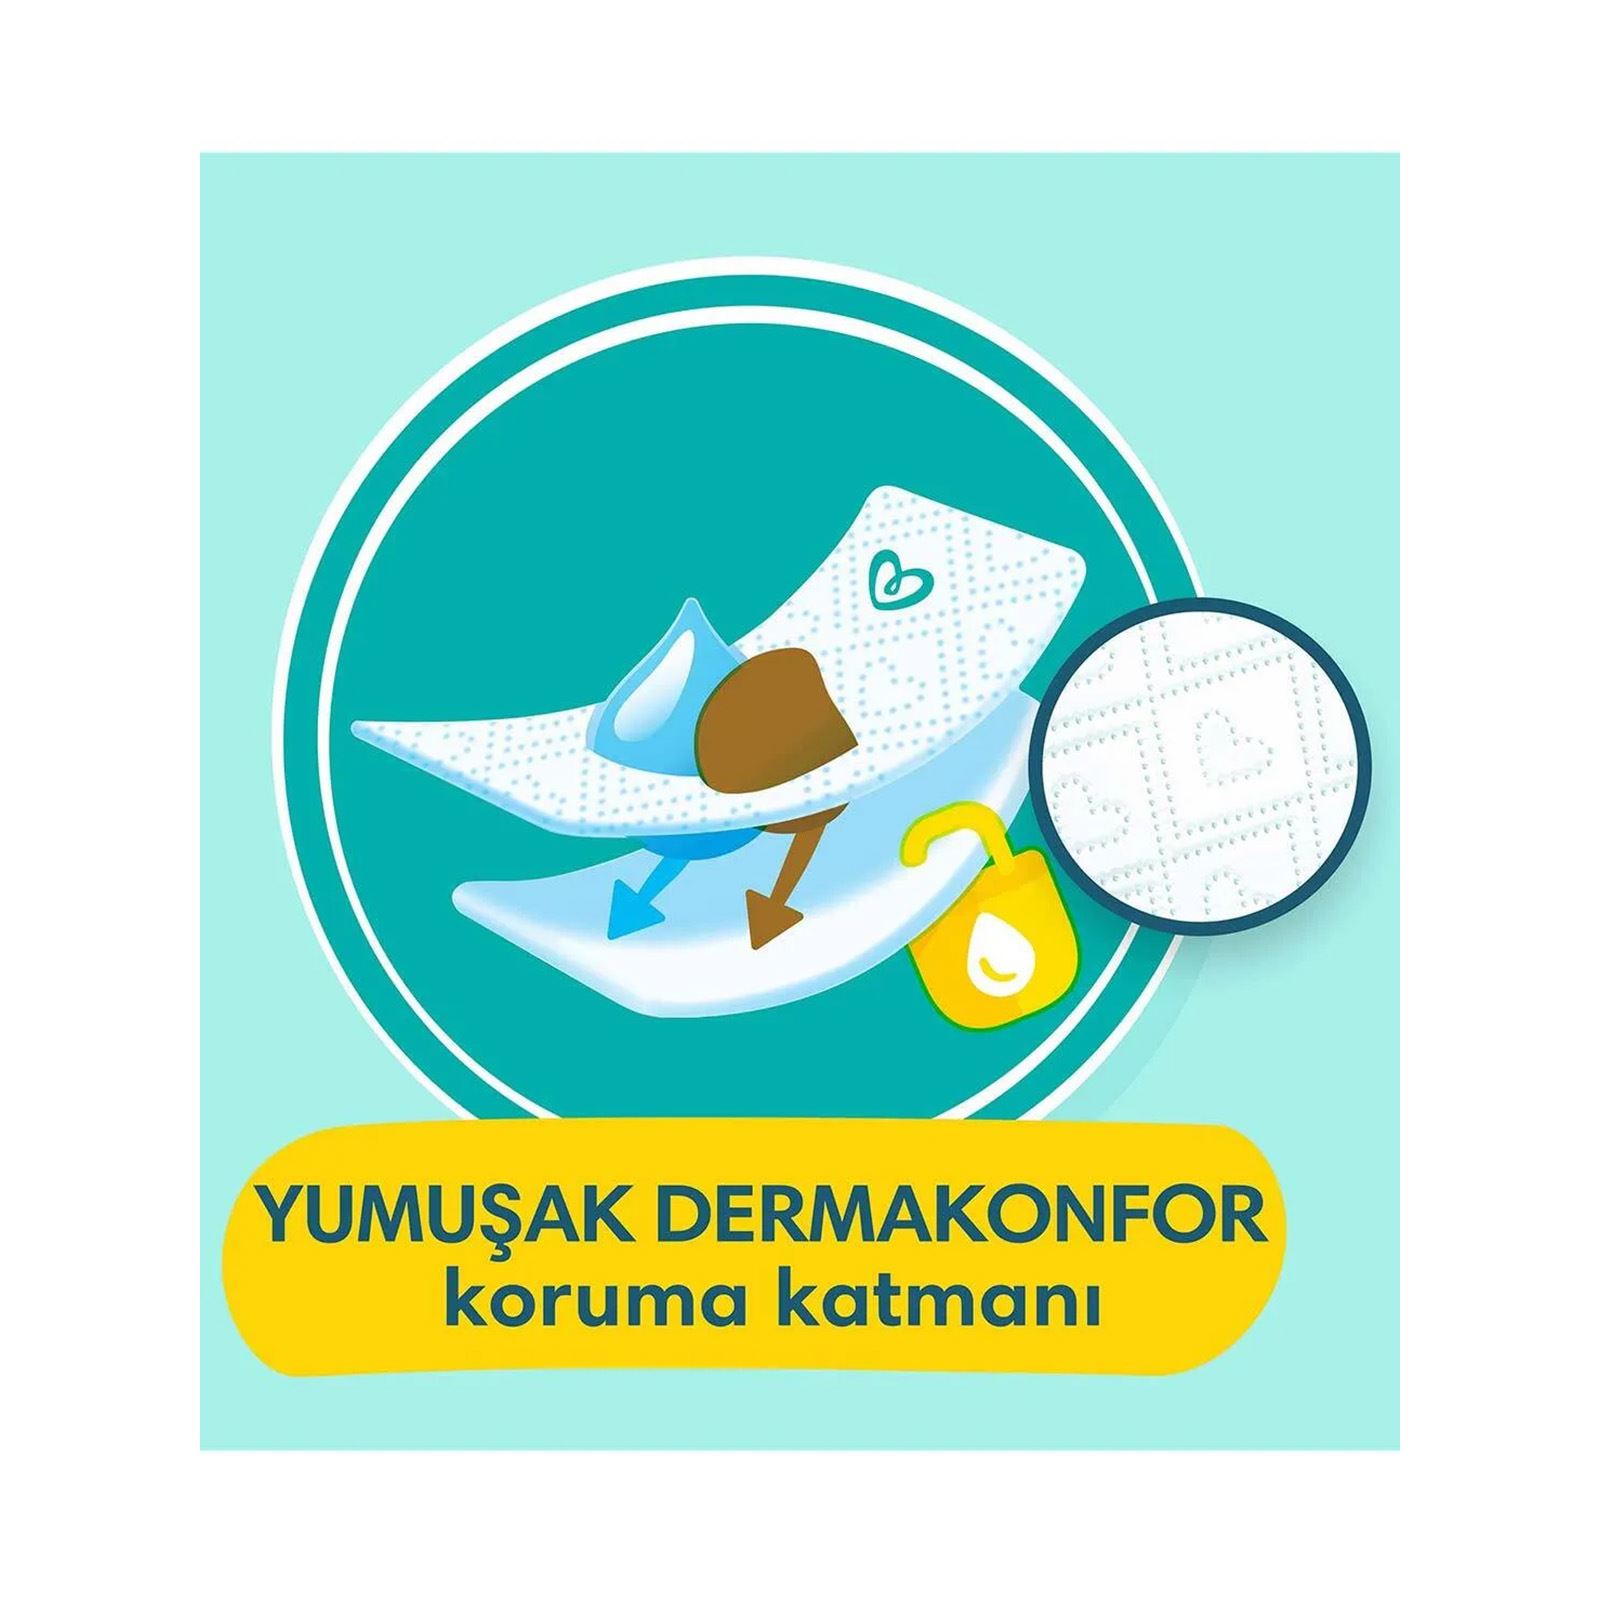 Prima Premium Care 1 Beden Bebek Bezi Ekonomik Paket Yenidoğan 70 Adet